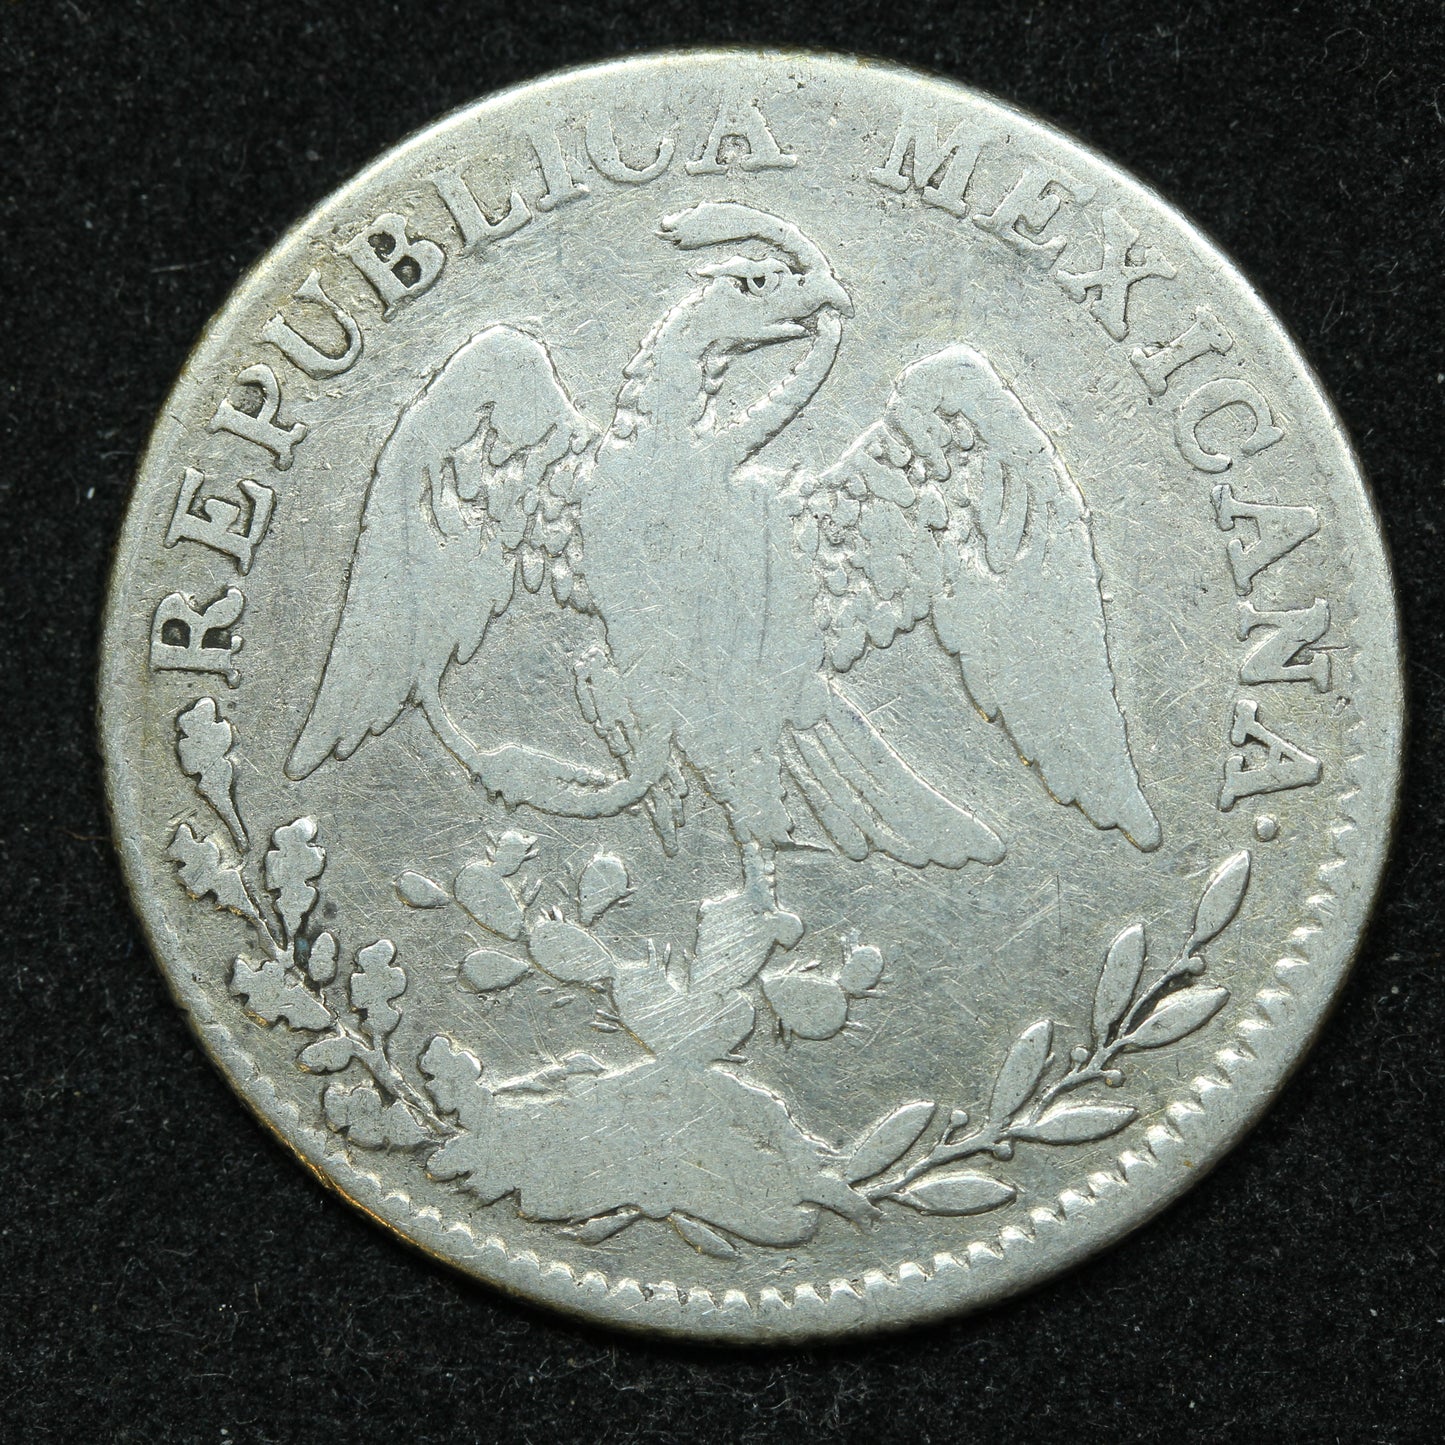 1837 2 Reales Go PJ Mexico Silver Coin - KM# 374.8